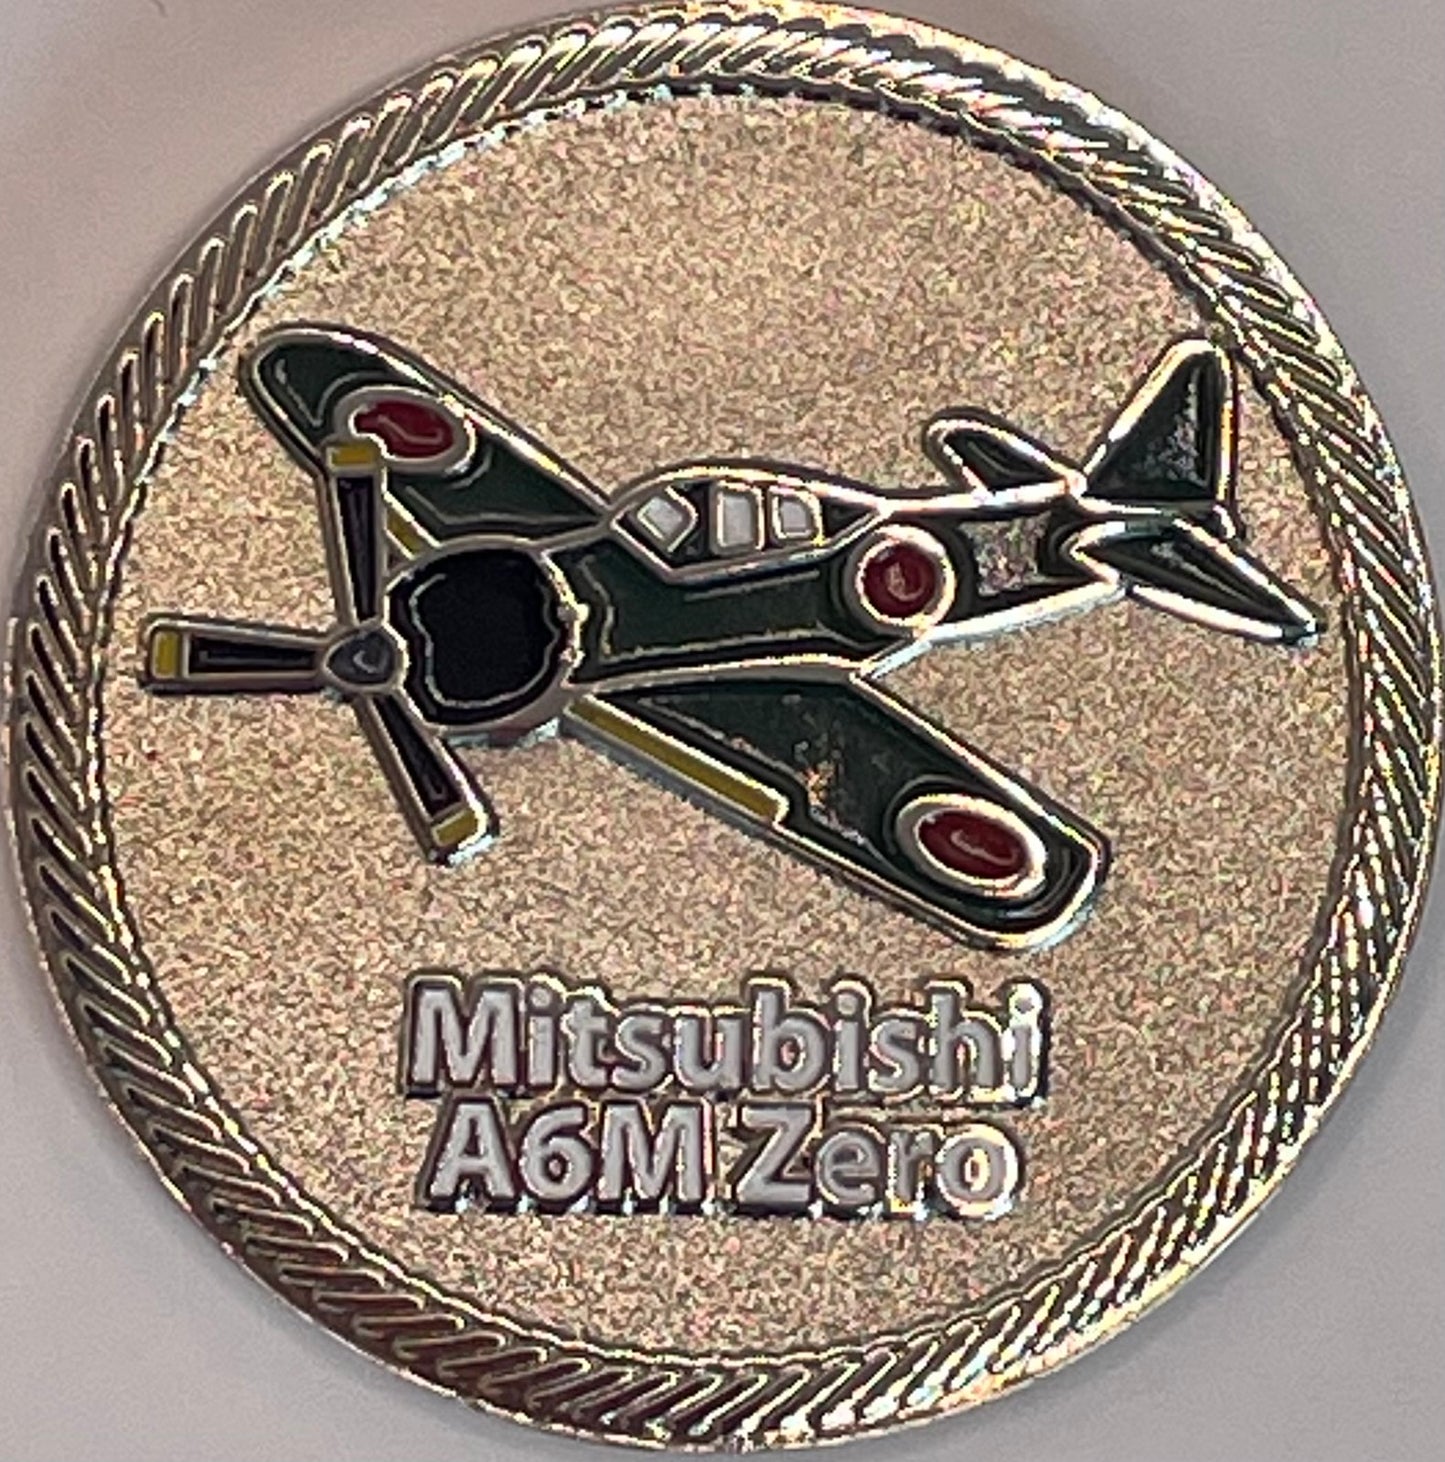 Exclusive Mitsubishi A6M Zero Challenge Coin